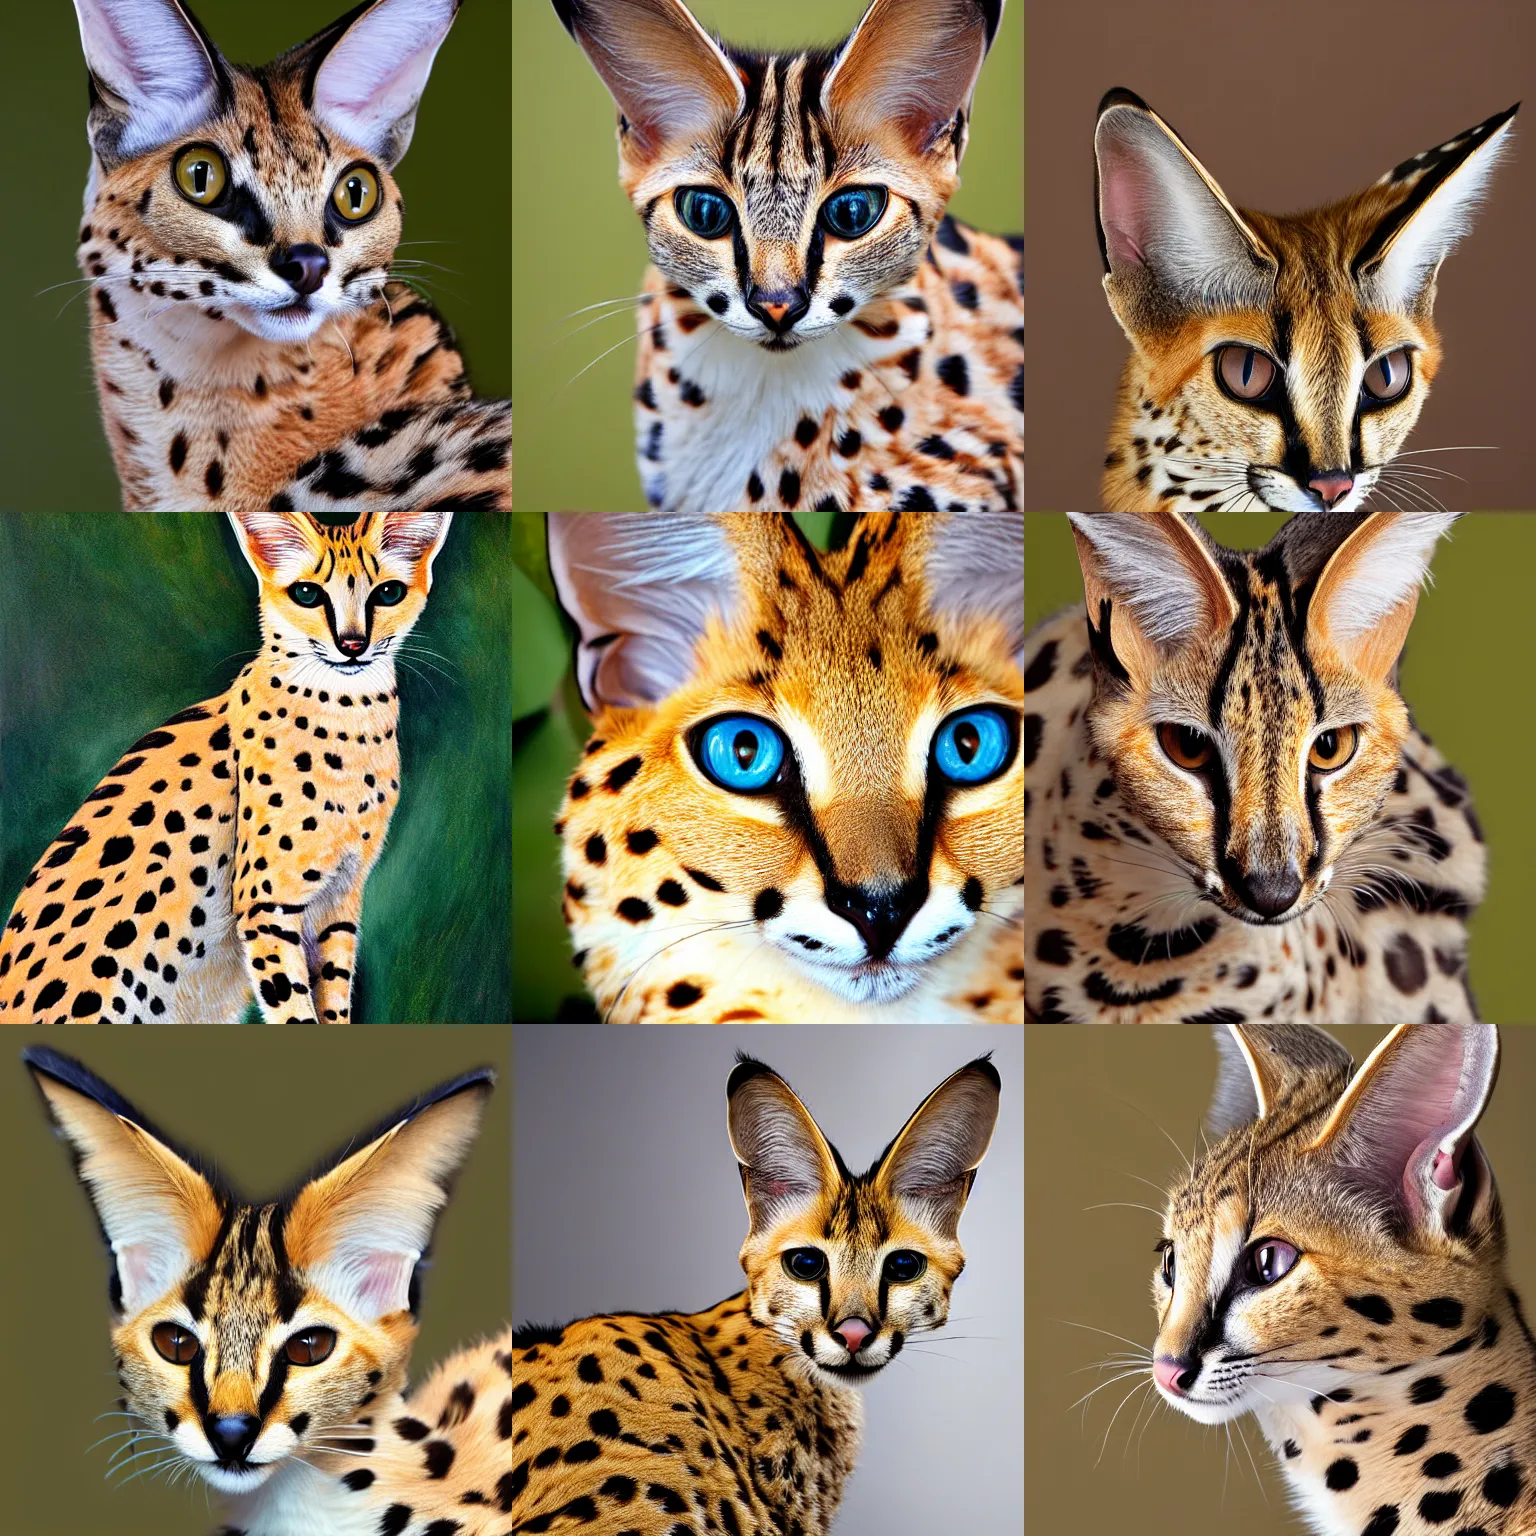 Prompt: portrait of an aristocratic serval cat.